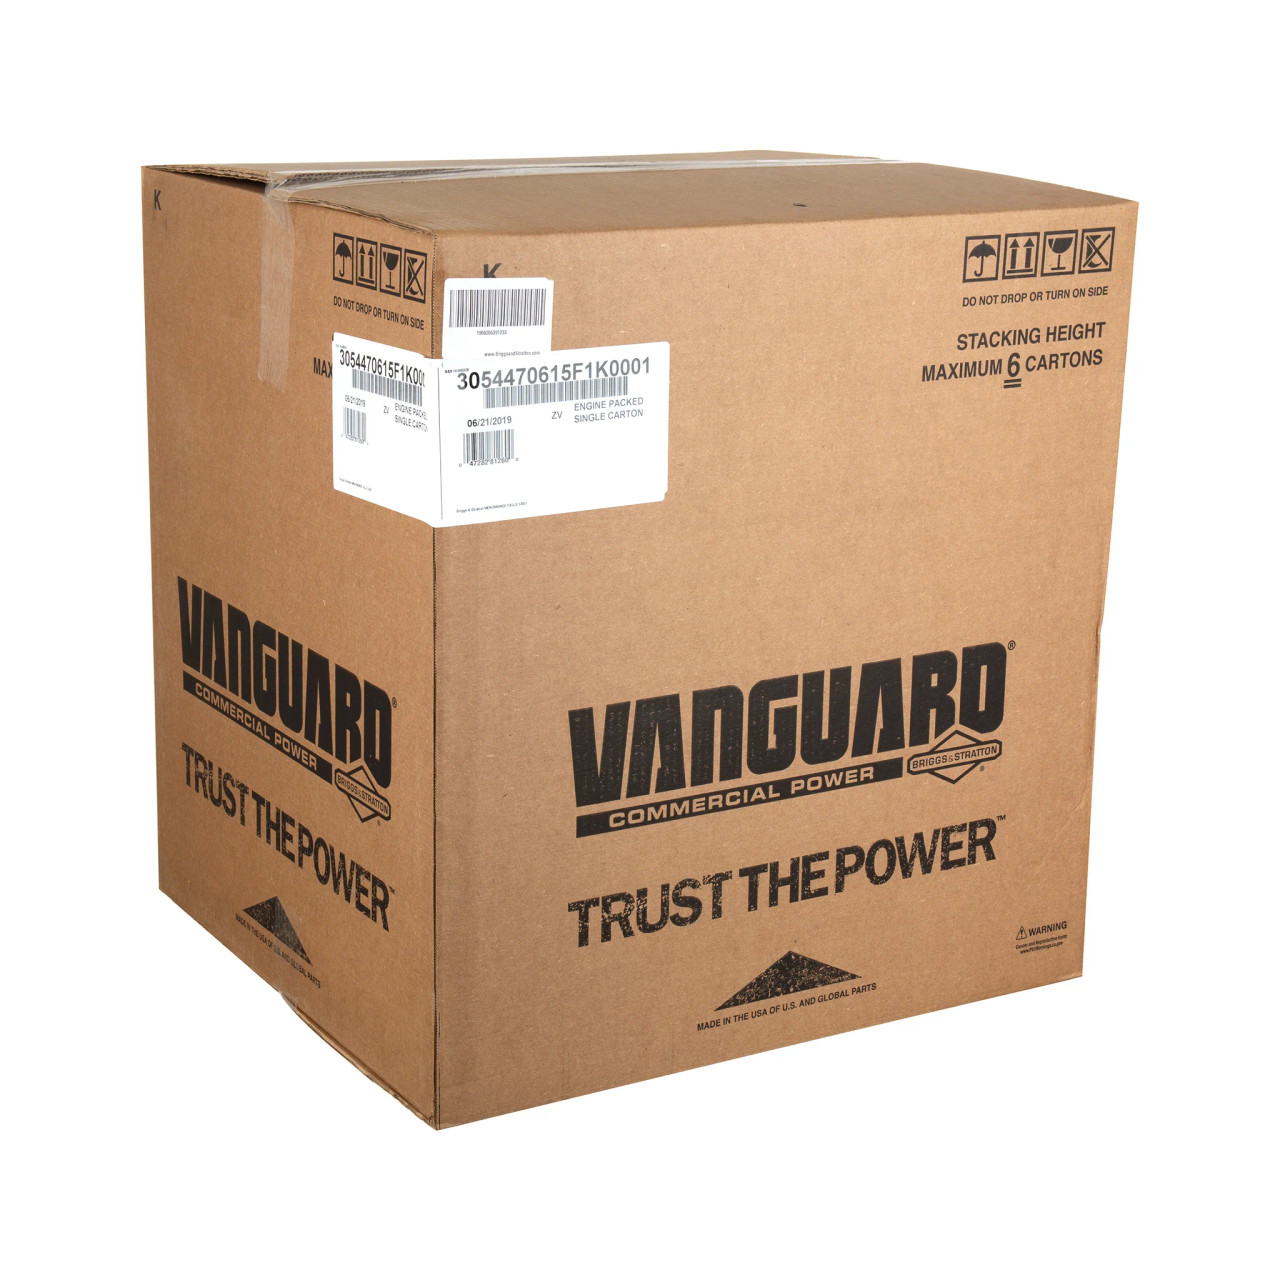 Vanguard® 16.0 HP 479cc Horizontal Shaft Engine
305447-0615-F1